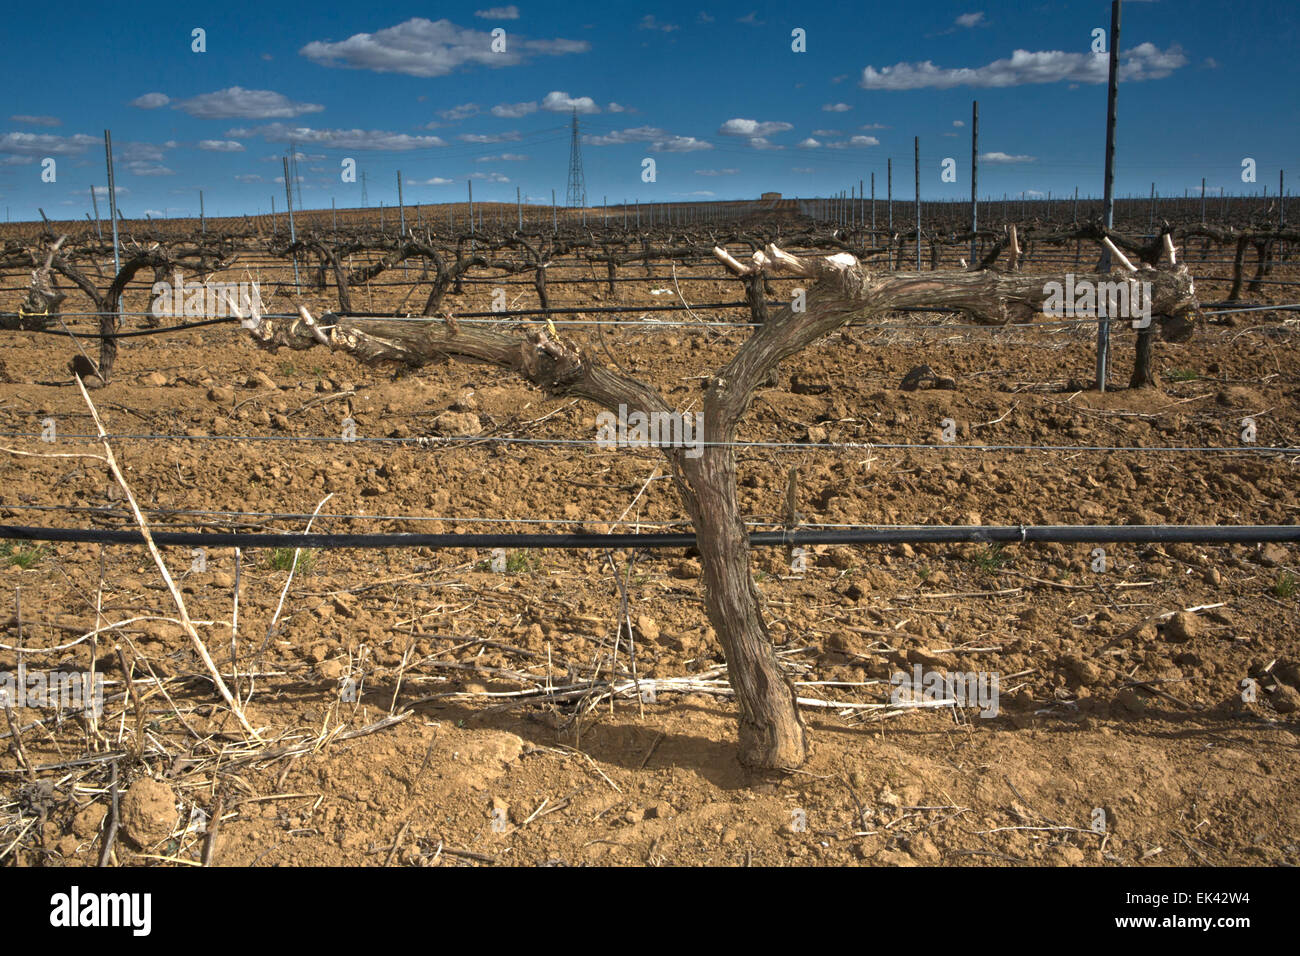 Cropland of Vineyards in winter Badajoz, Spain Stock Photo